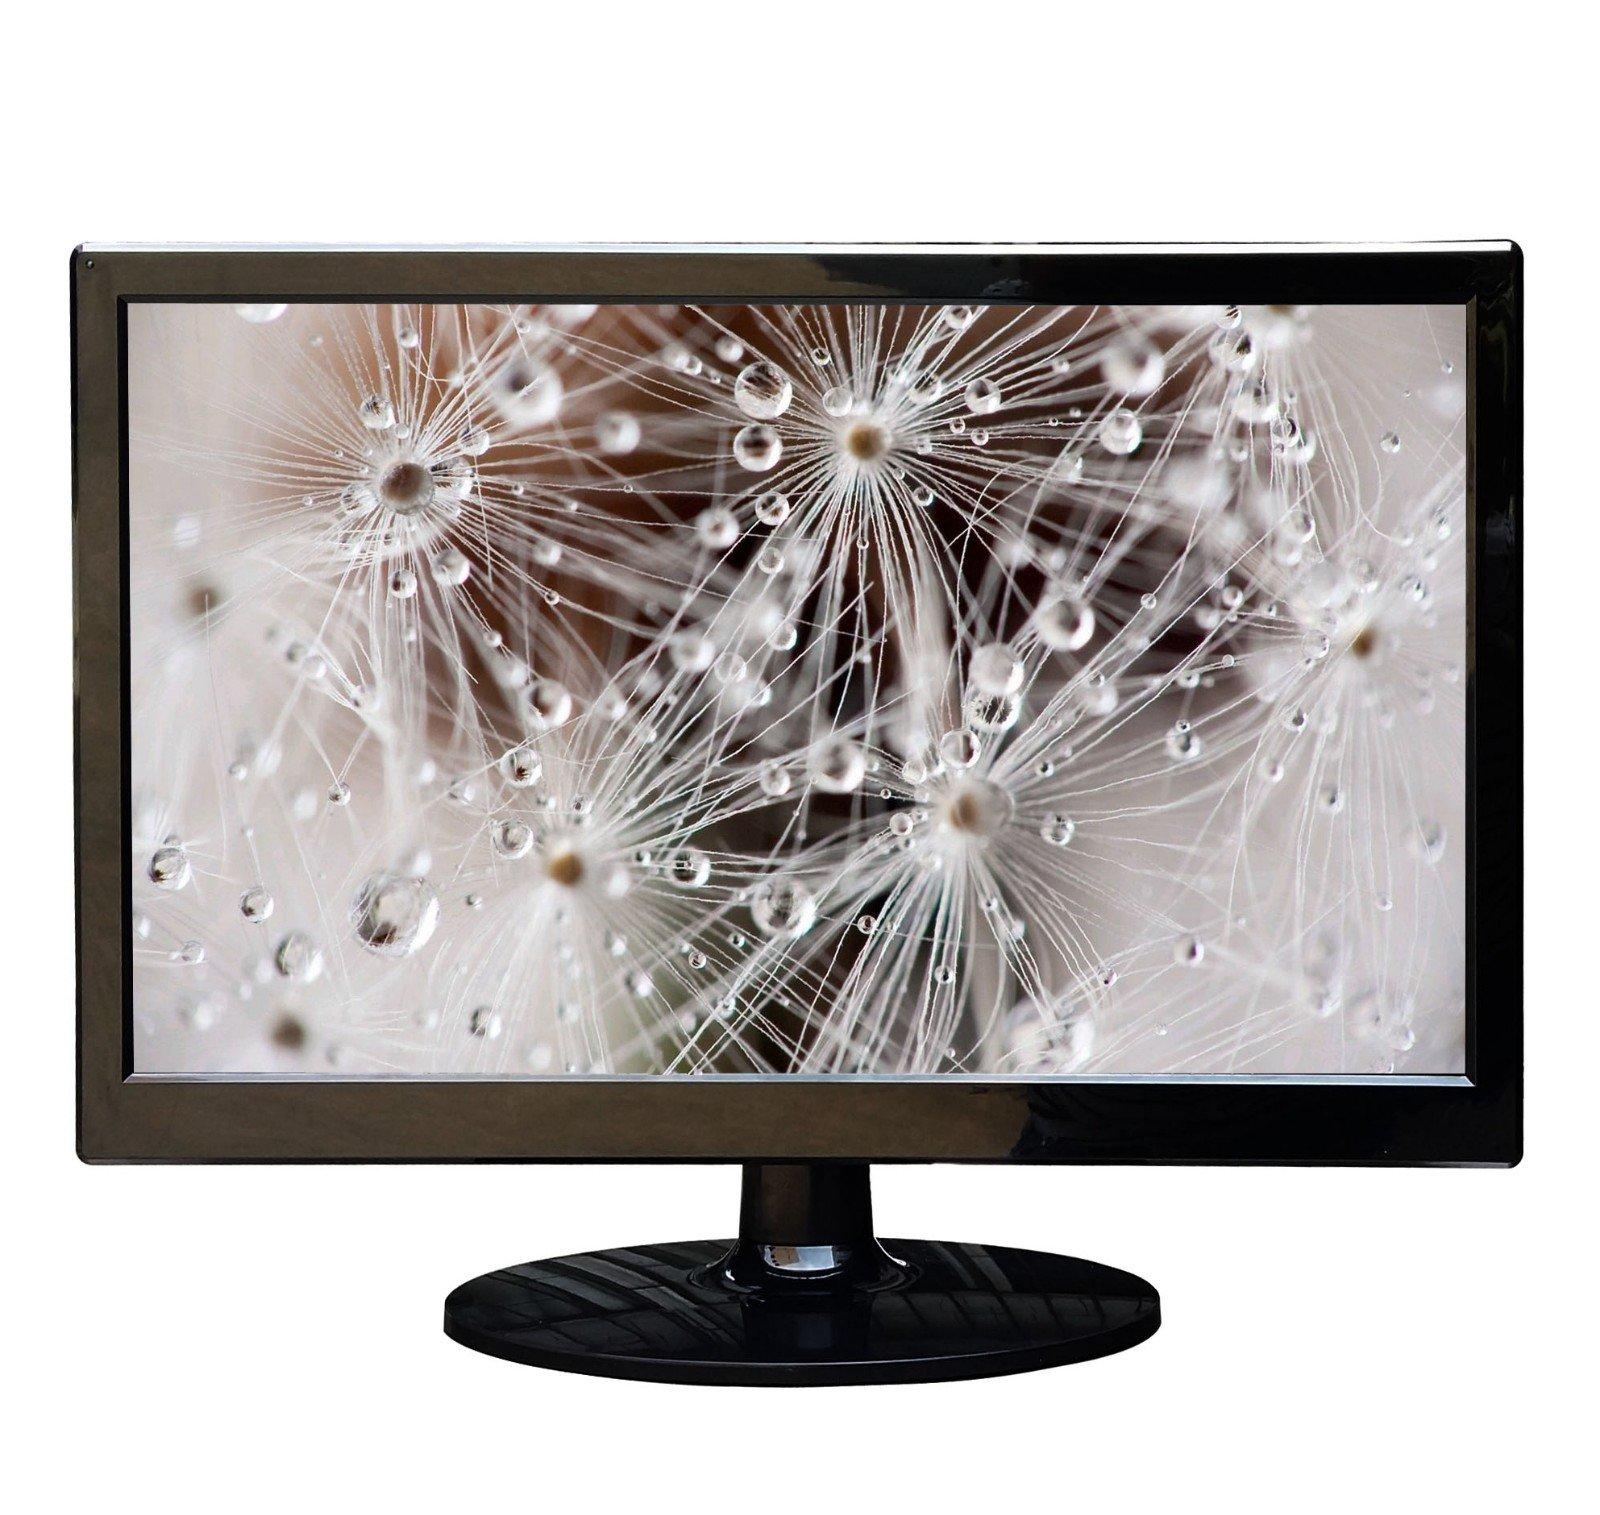 lcd hd 19 inch full hd monitor on Xinyao LCD